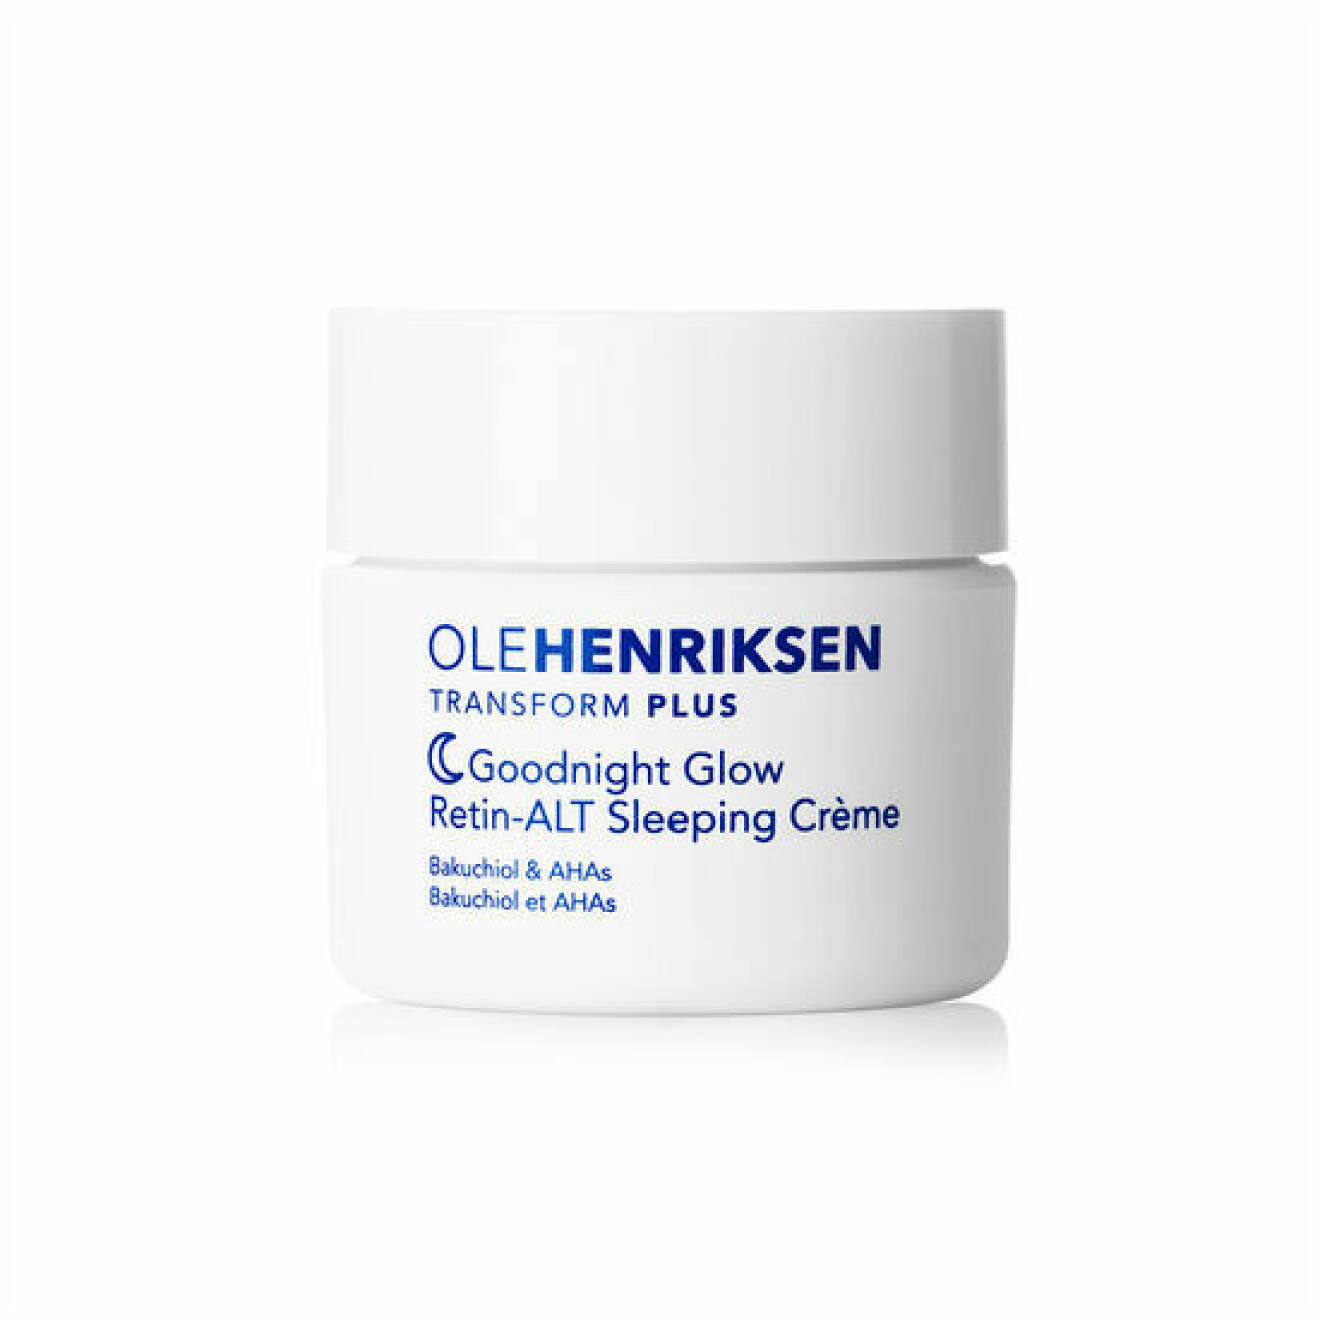 Goodnight glow retin-ALT sleeping crème från Ole Henriksen.